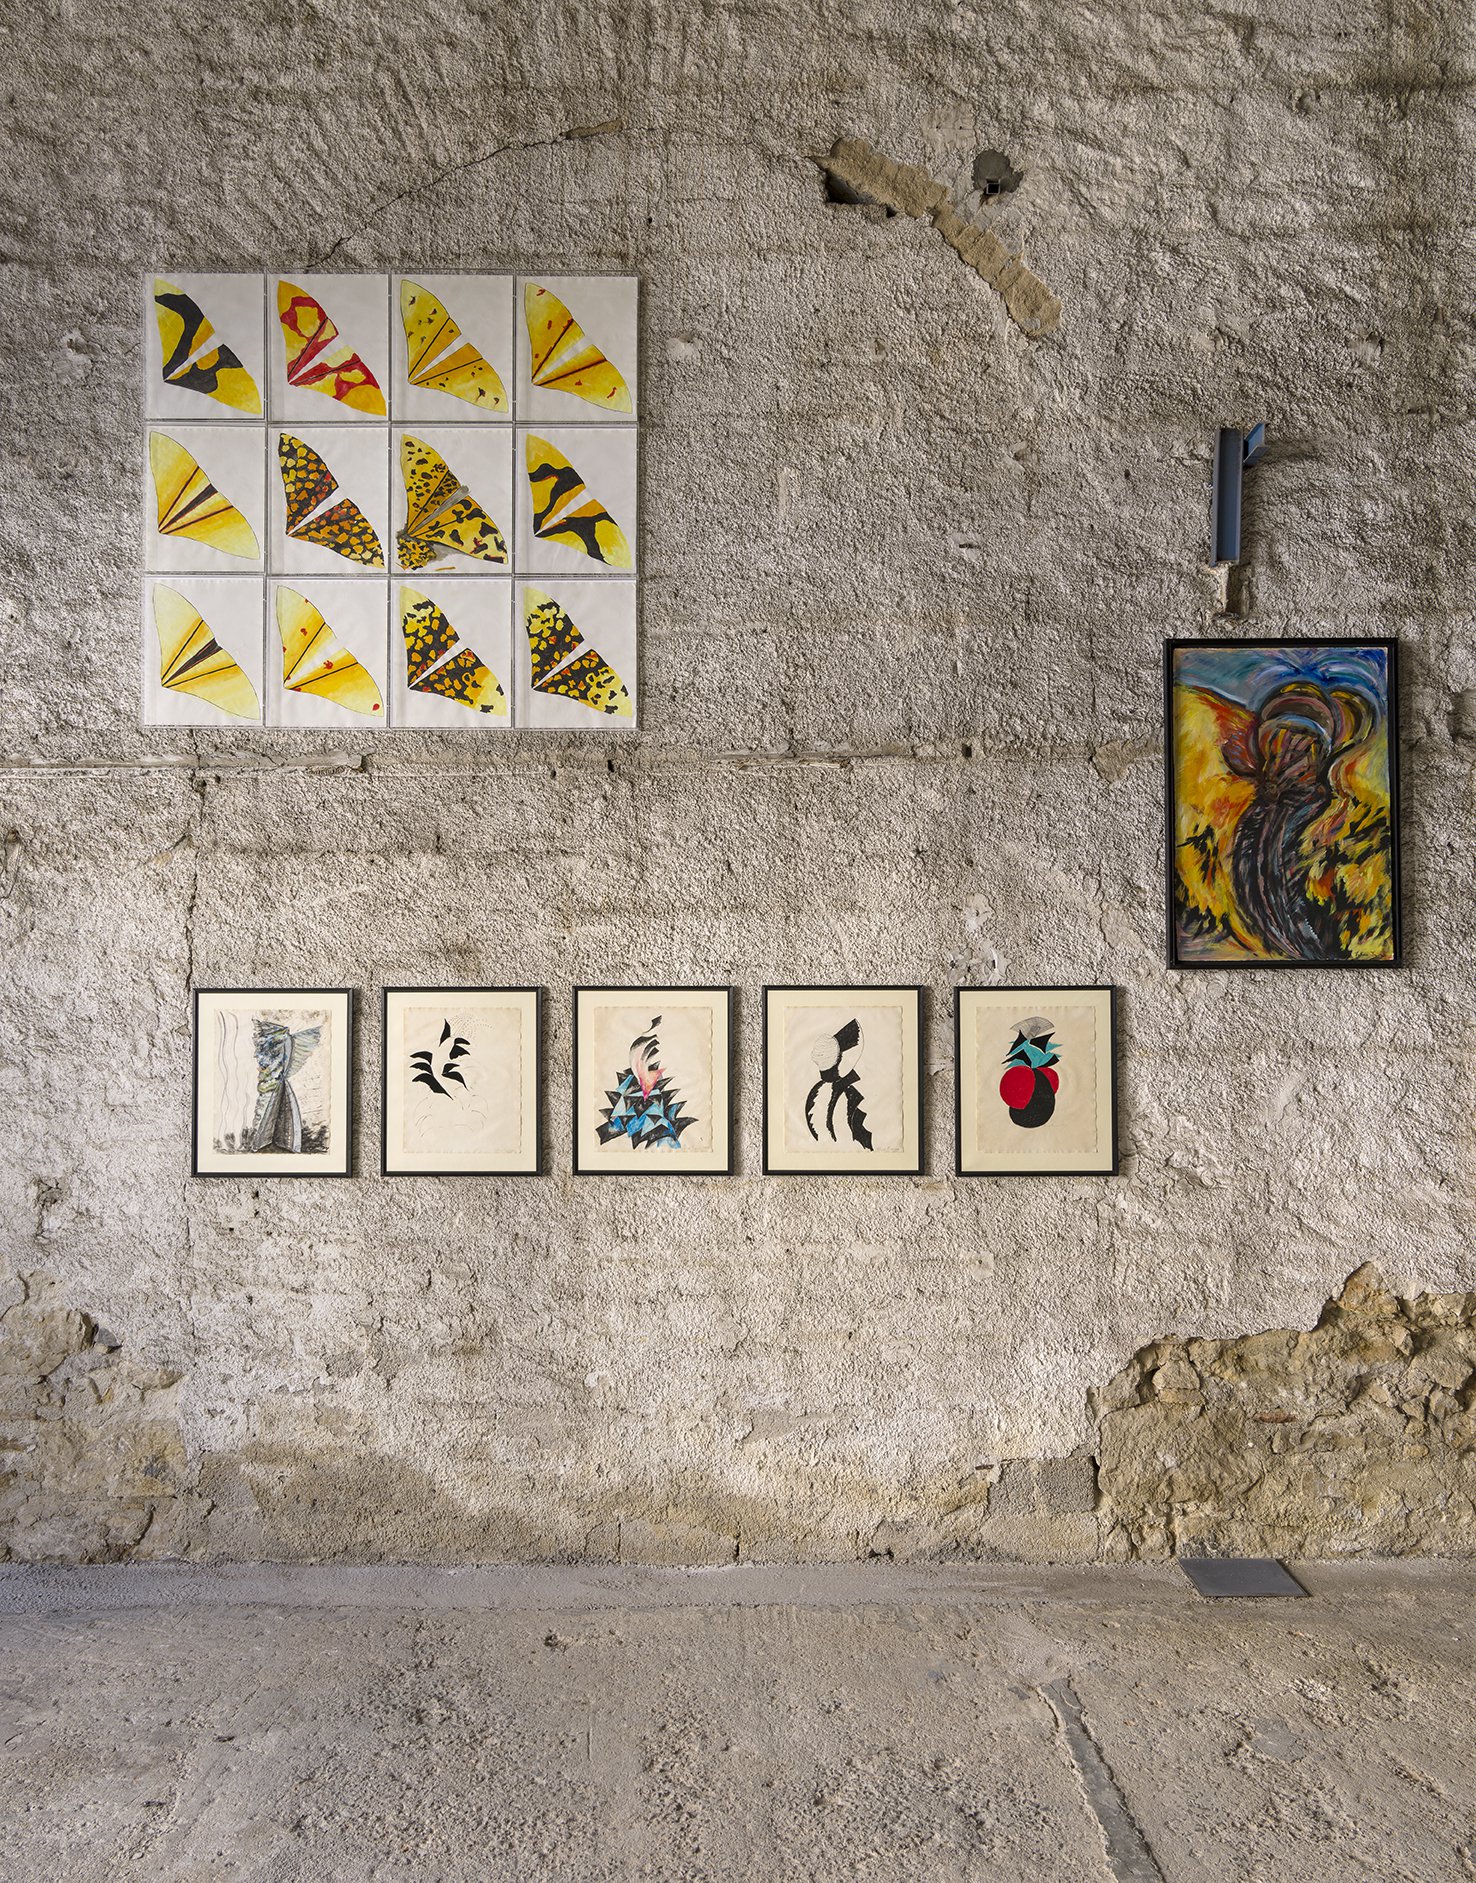 Liliane Lijn, Installation view, Cosmic Dramas, Rodeo, Piraeus, 2018